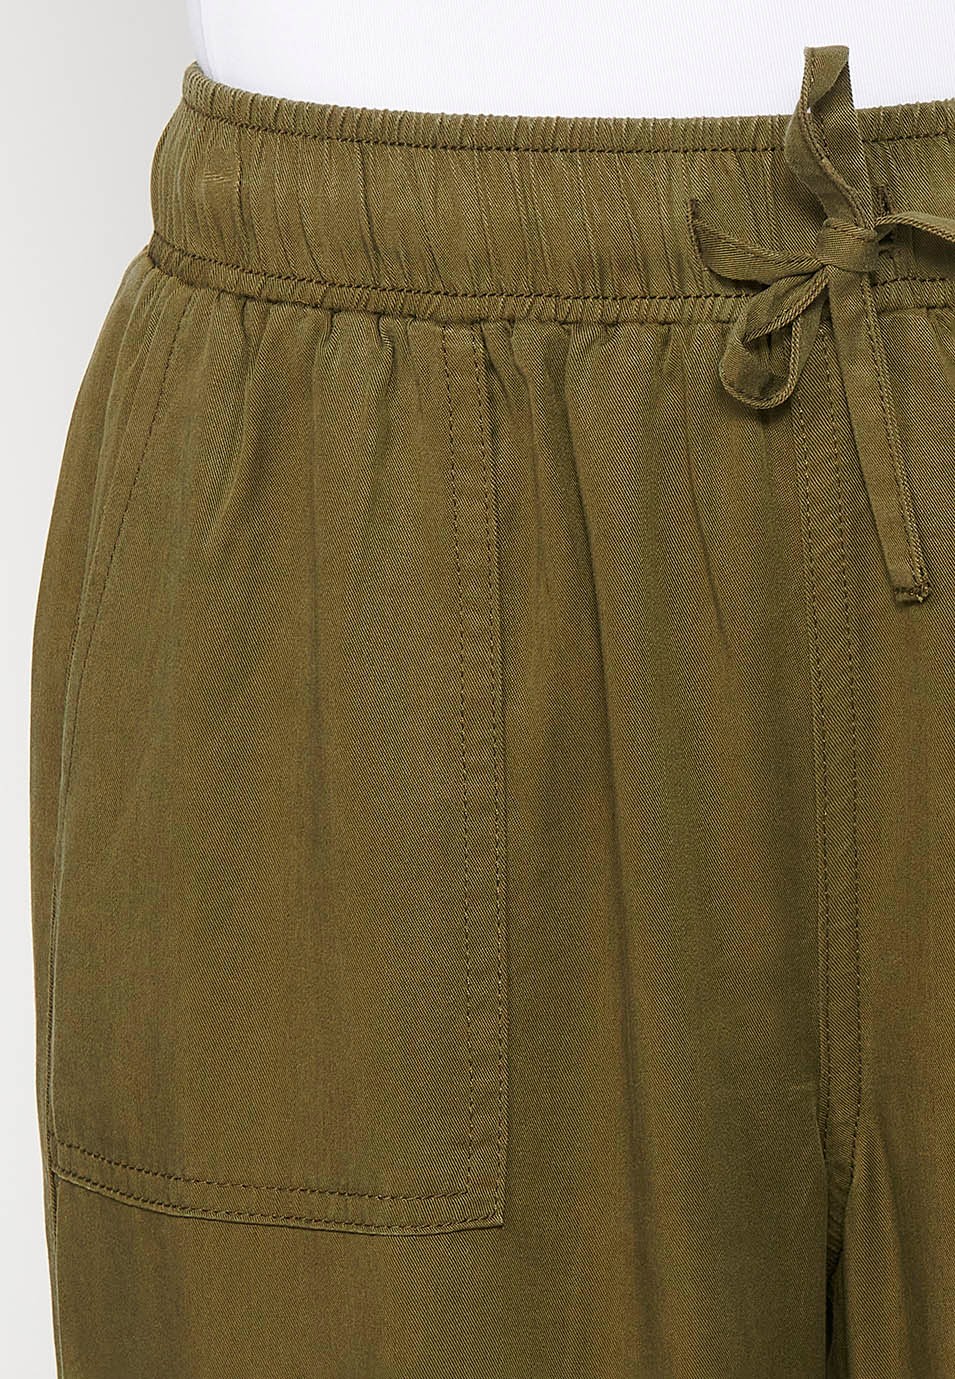 Khaki long jogging pants with rubberized waist for women